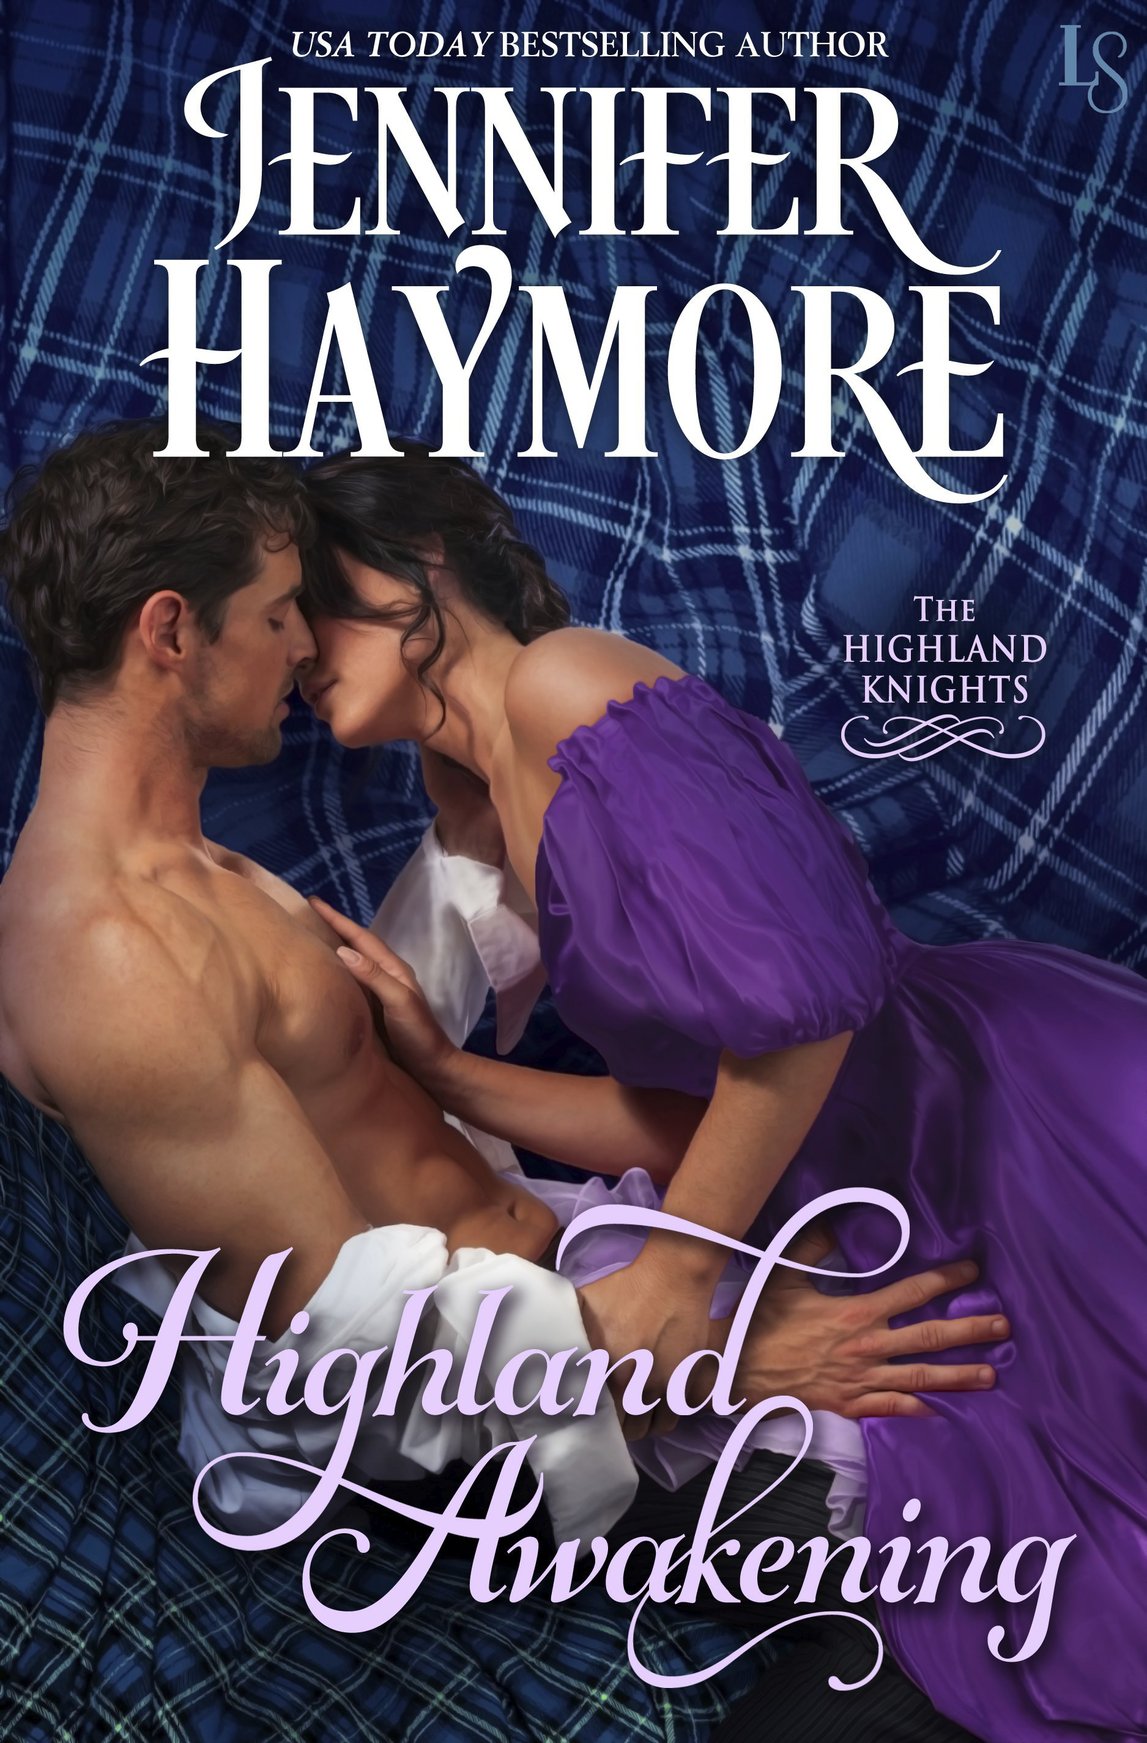 Highland Awakening (2016) by Jennifer Haymore